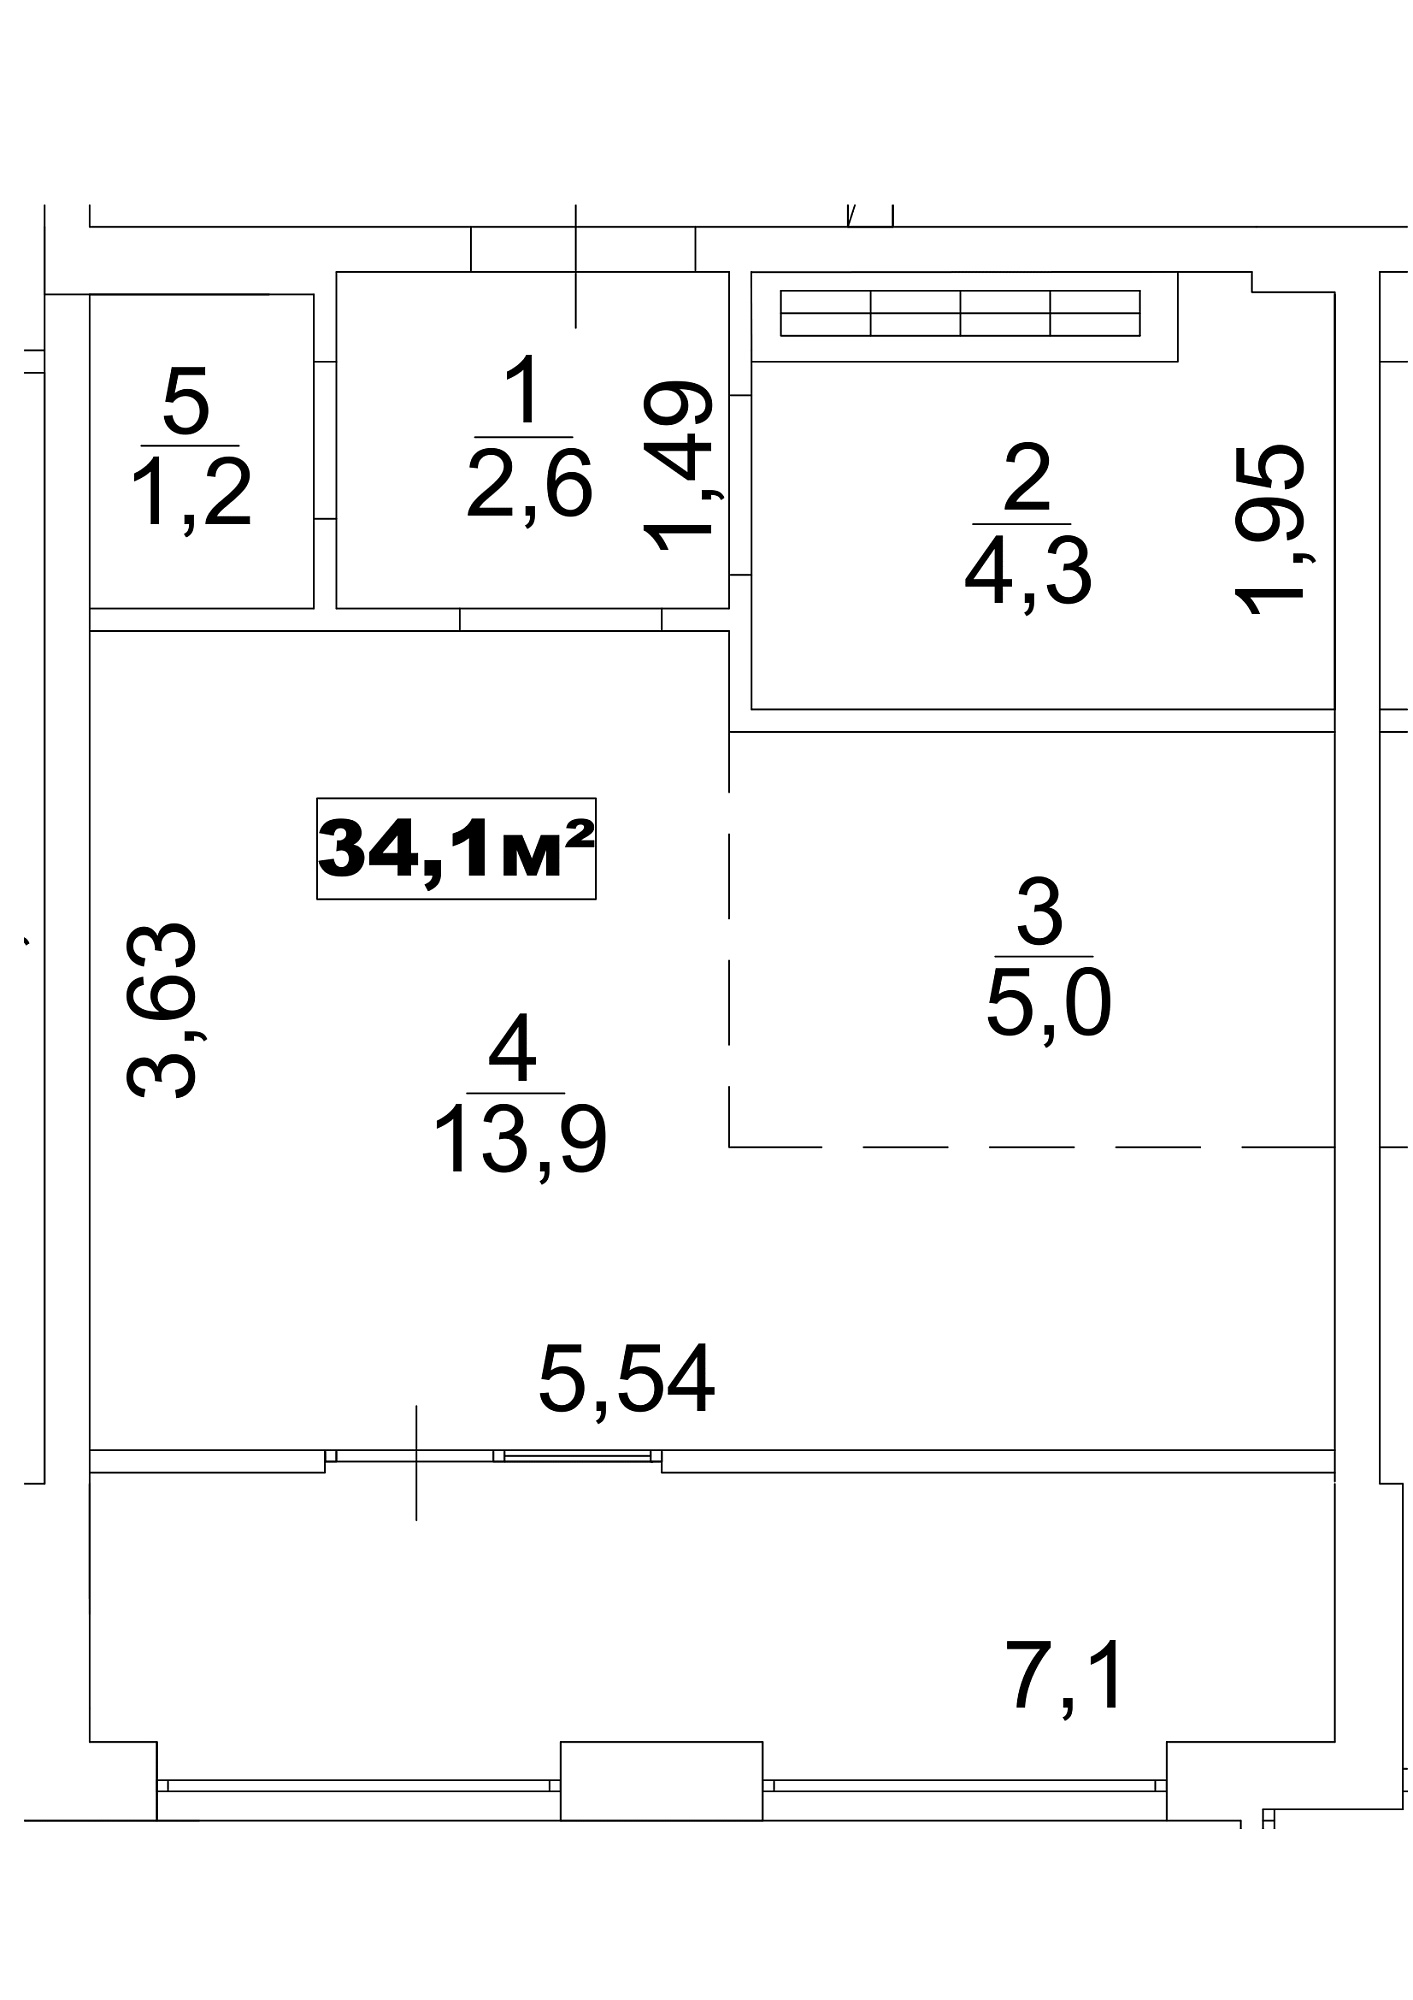 Planning Smart flats area 34.1m2, AB-13-02/00008.